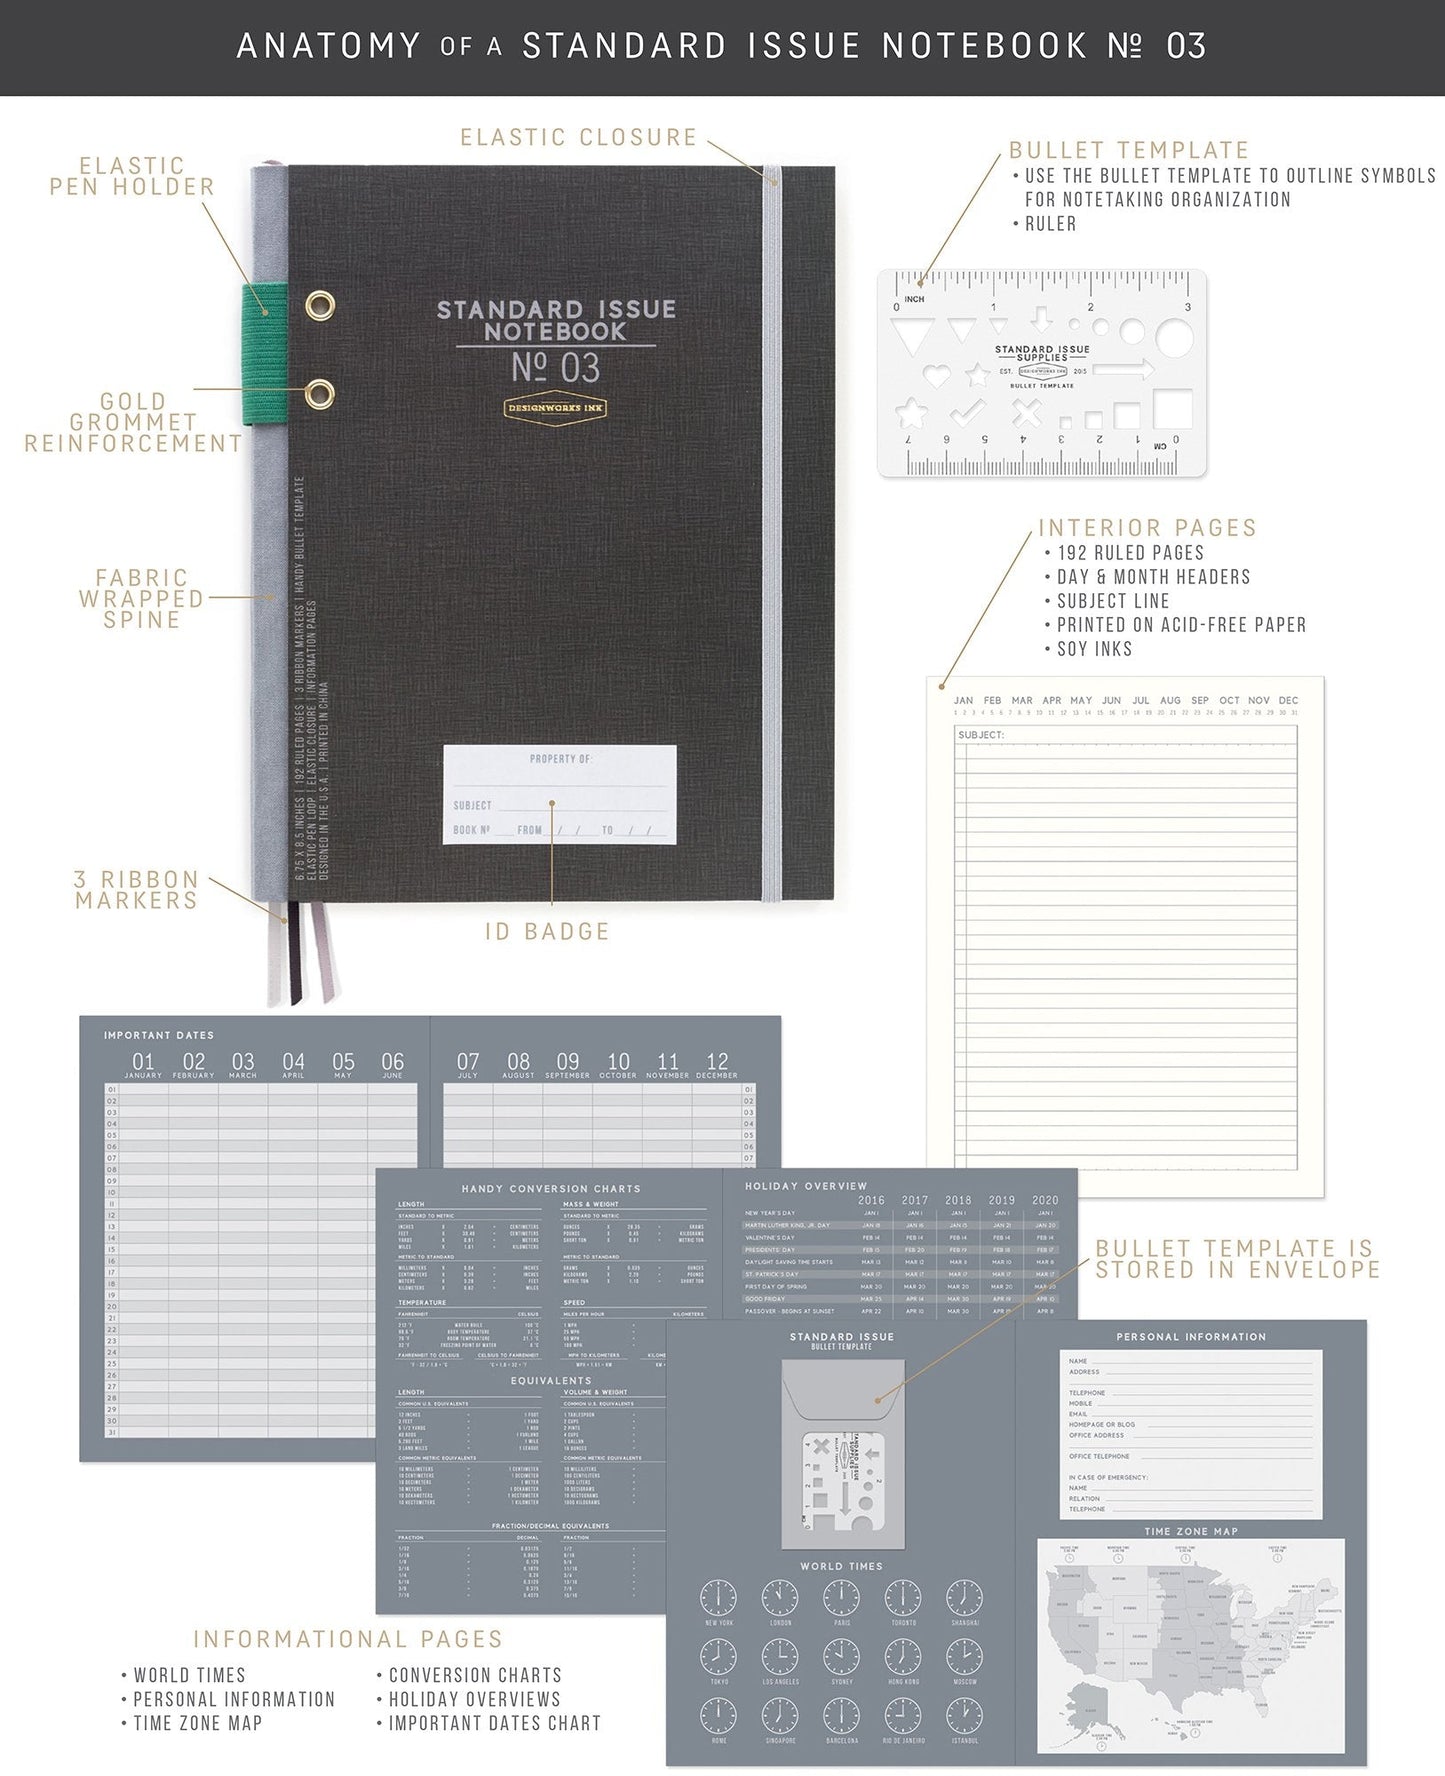 Standard Issue Notebook - Black